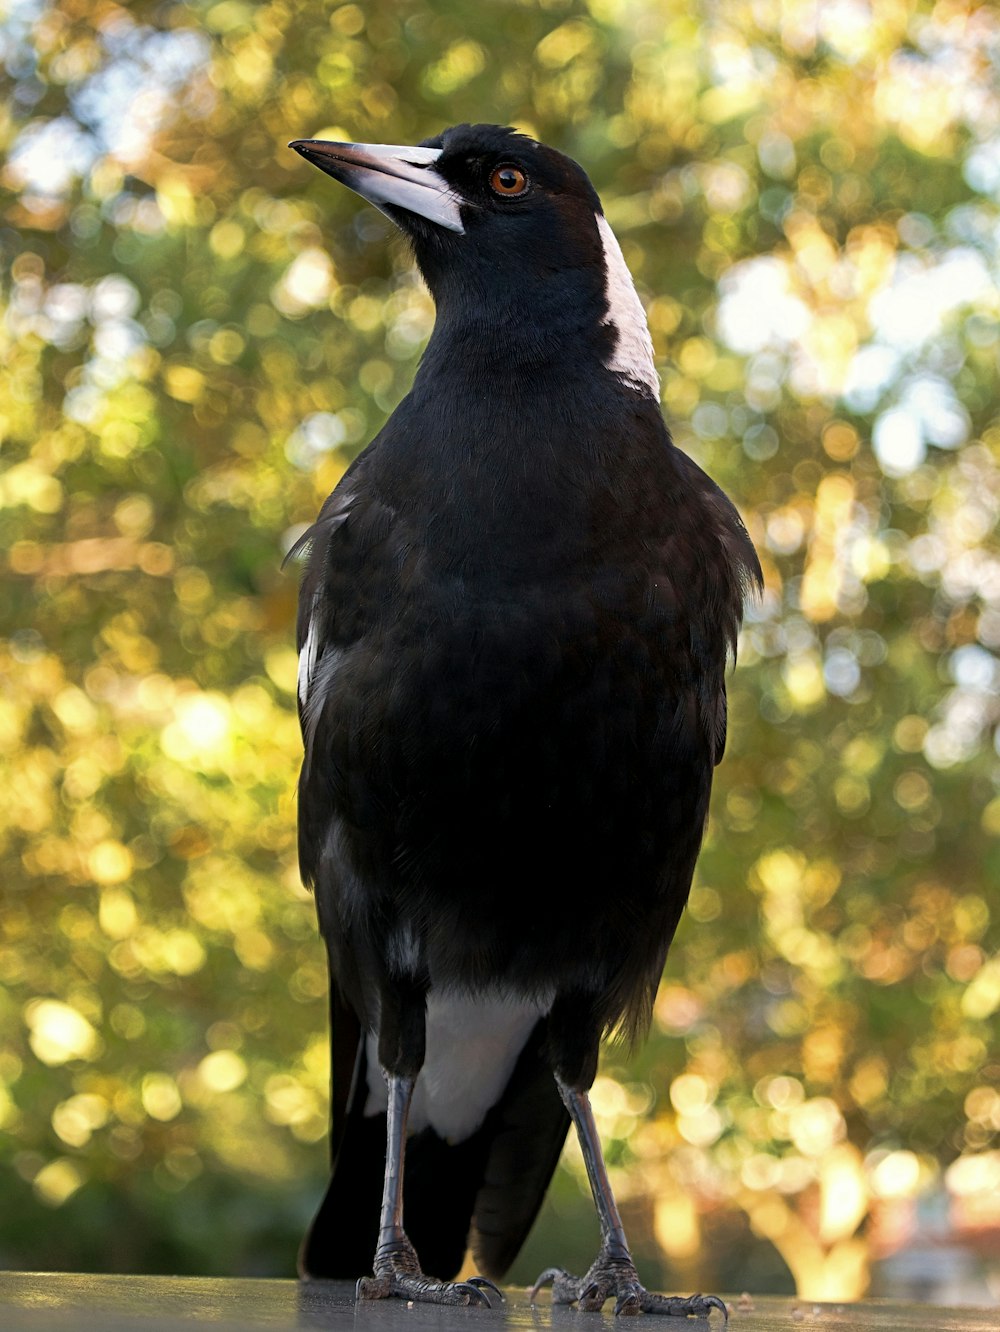 a black bird with a long beak